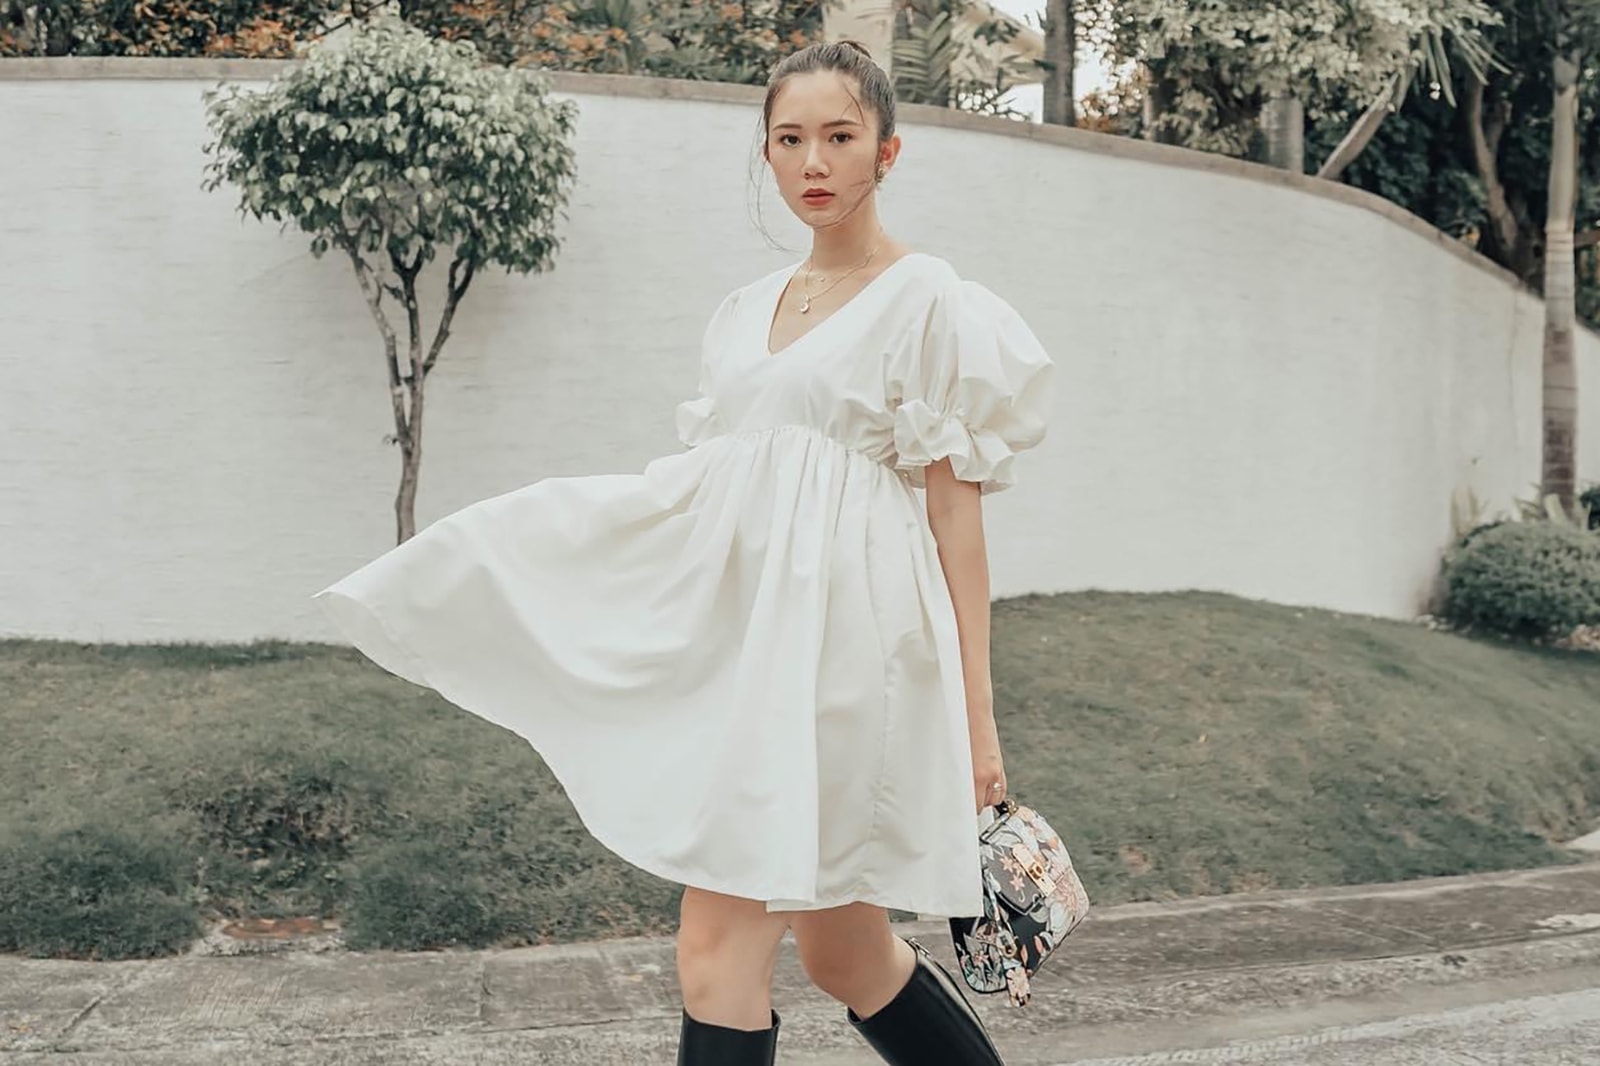 Filipino Brand House of Enchanté Founder Ara Madrigal Philippines Designer Filipiniana Dress